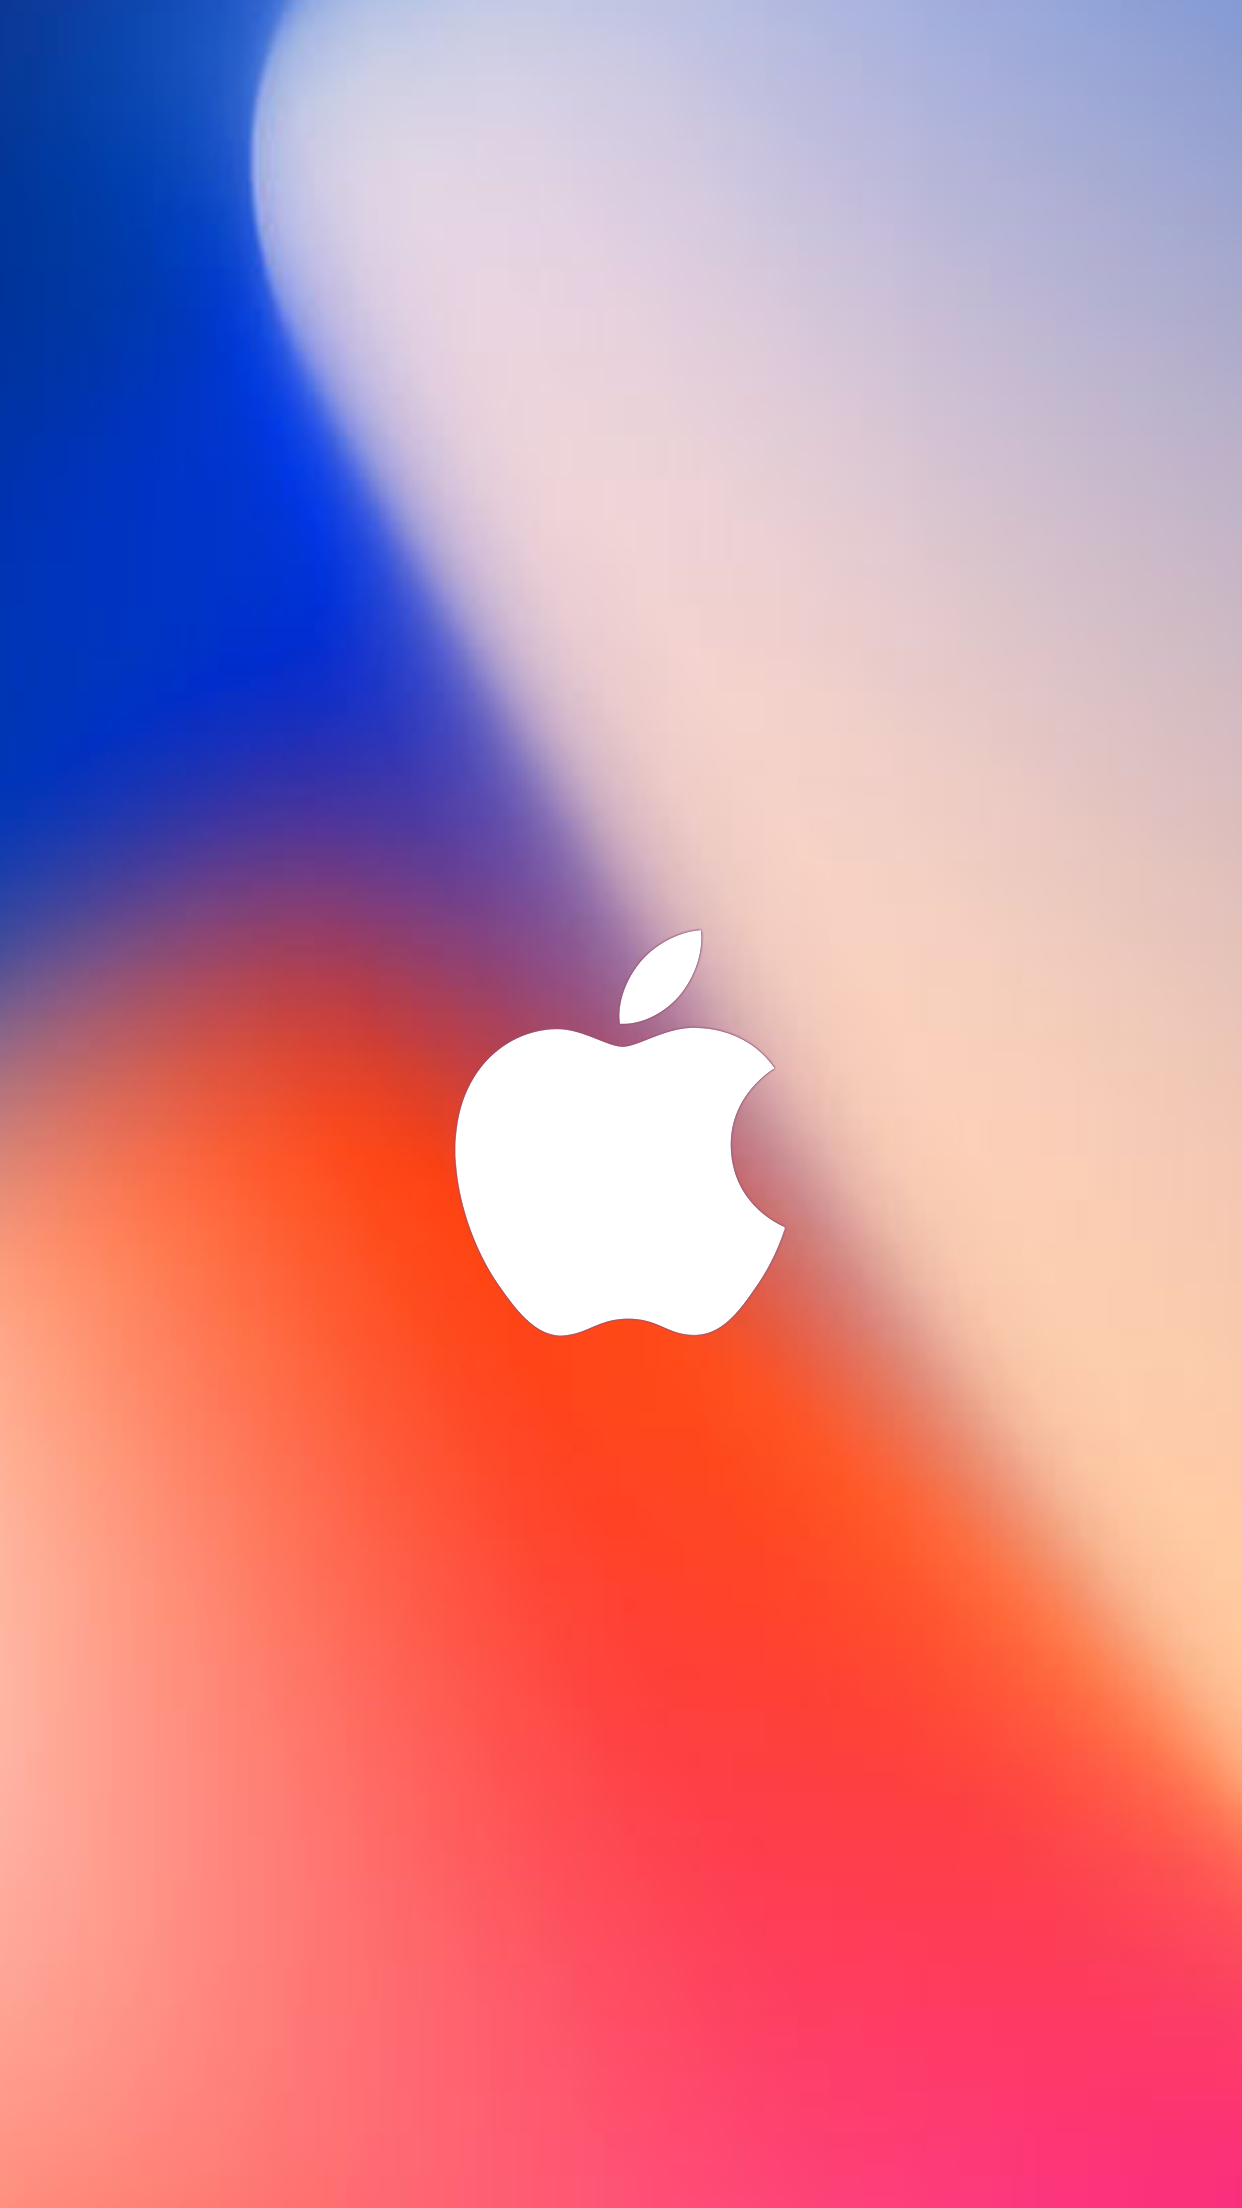 iphone logo wallpaper,sky,daytime,orange,heart,cloud